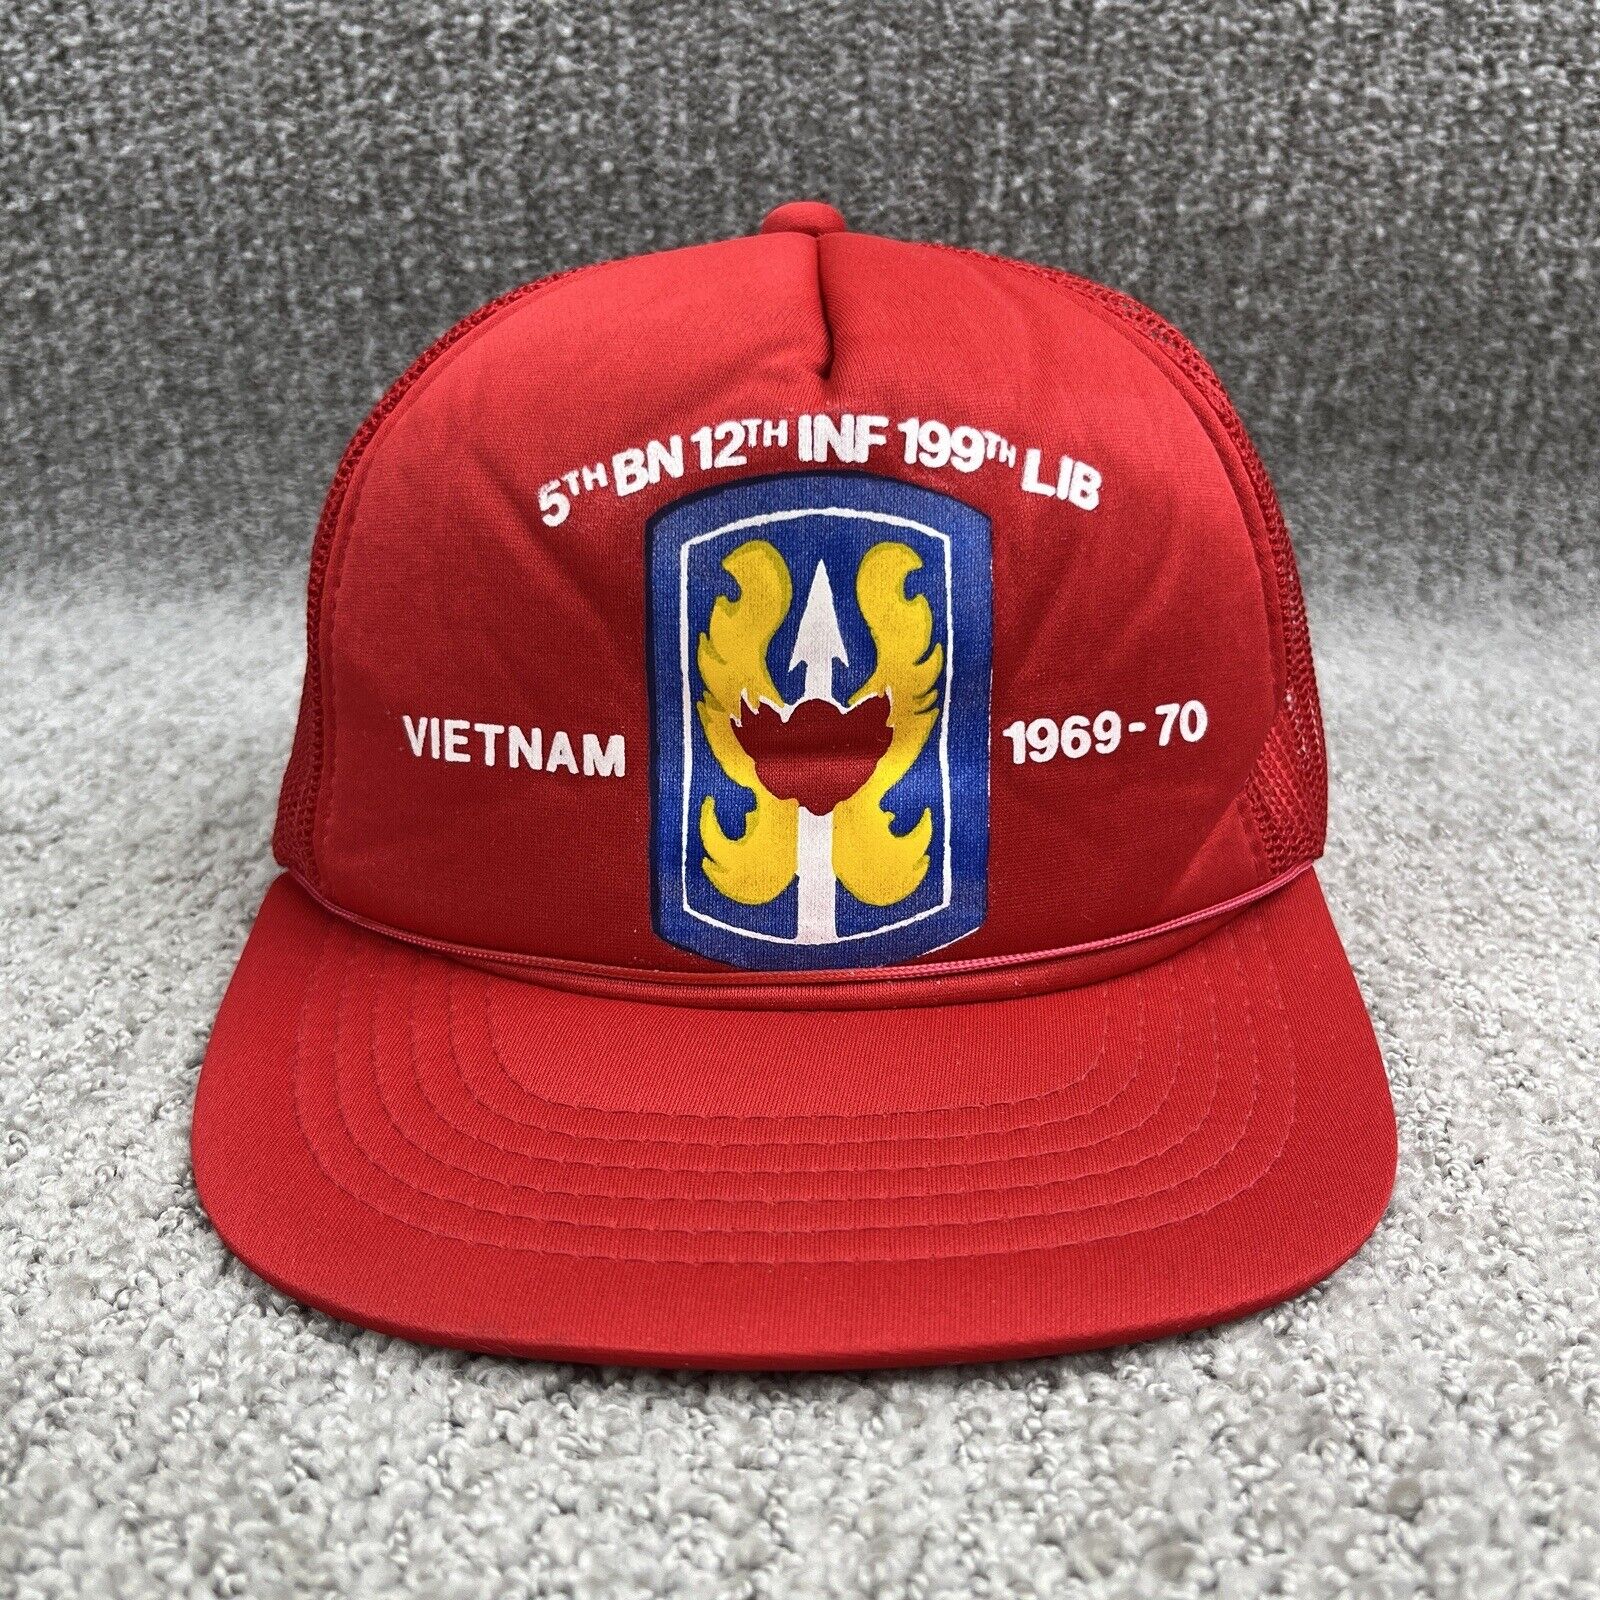 Vietnam Cap Hat 5th Battalion 12th Infantry 199th Light Infantry Brigade US Army